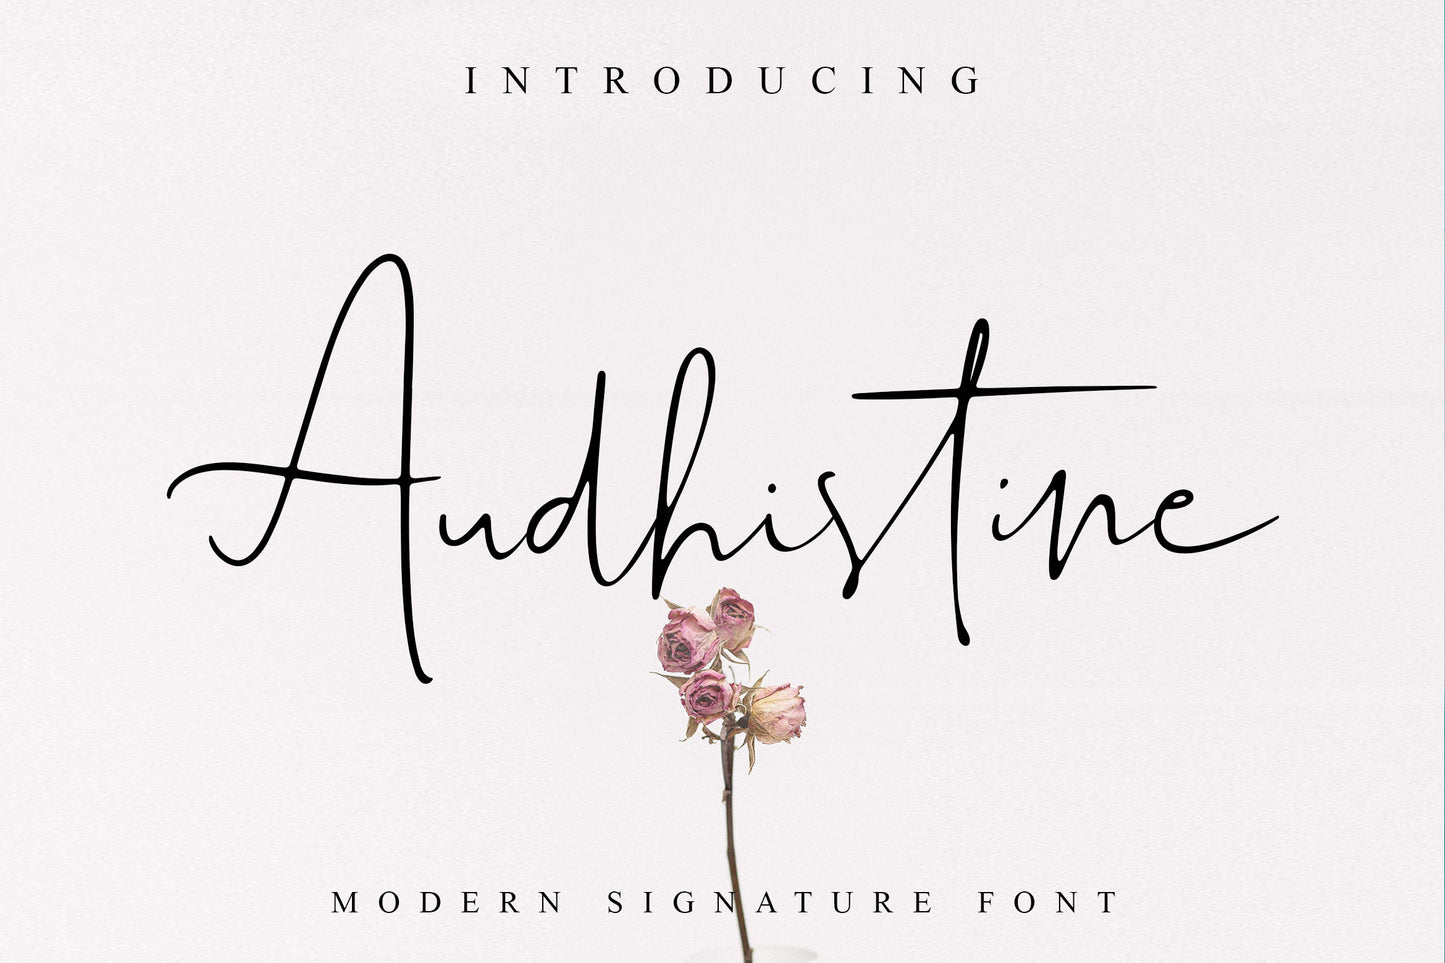 Free Audhistine Font